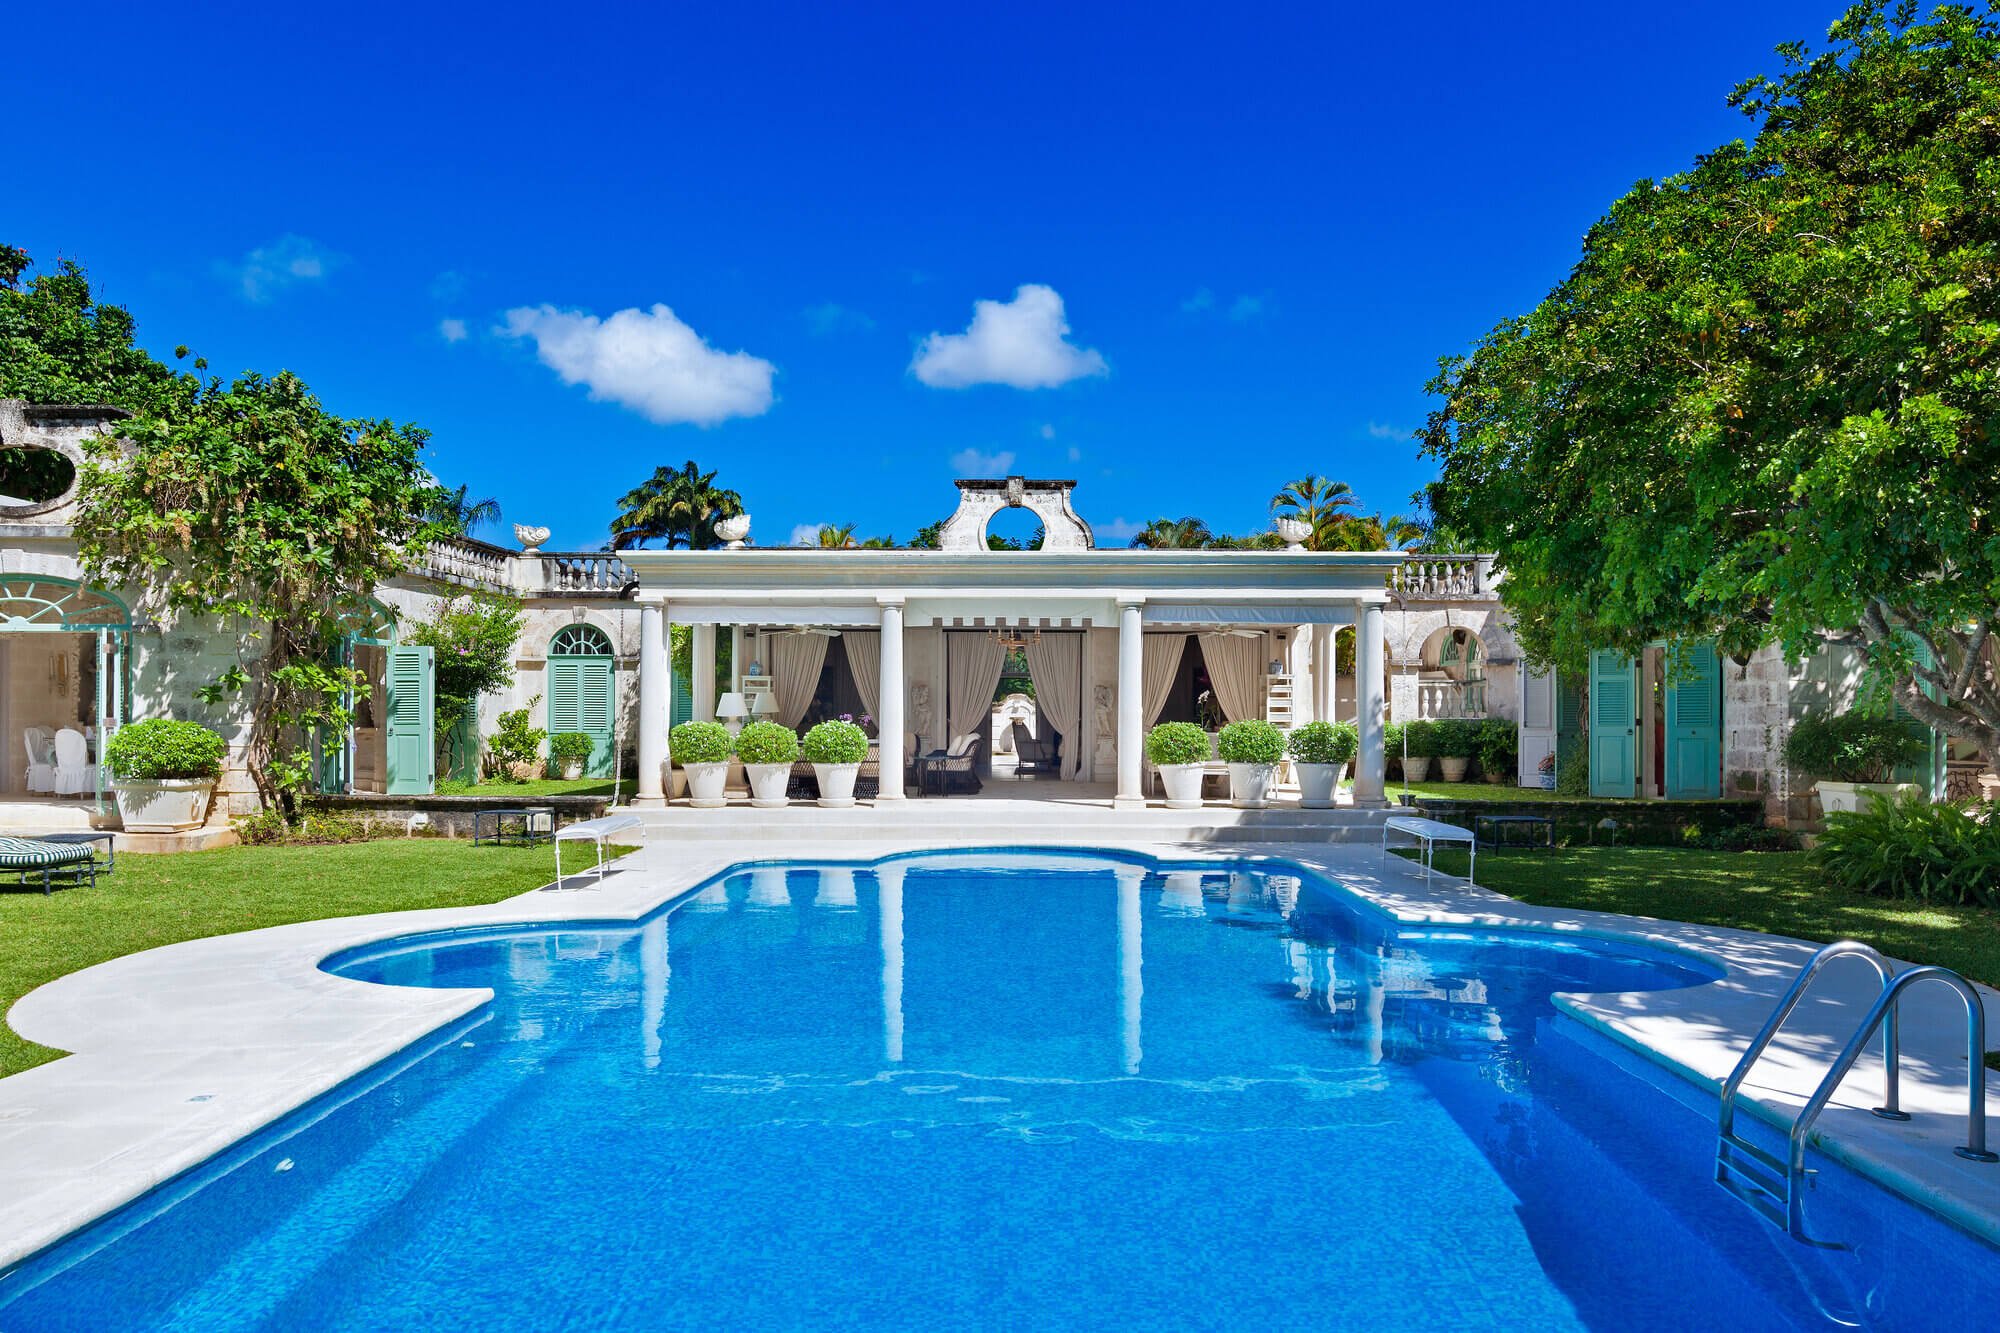 Our staffed Caribbean villas promise 5-star luxury